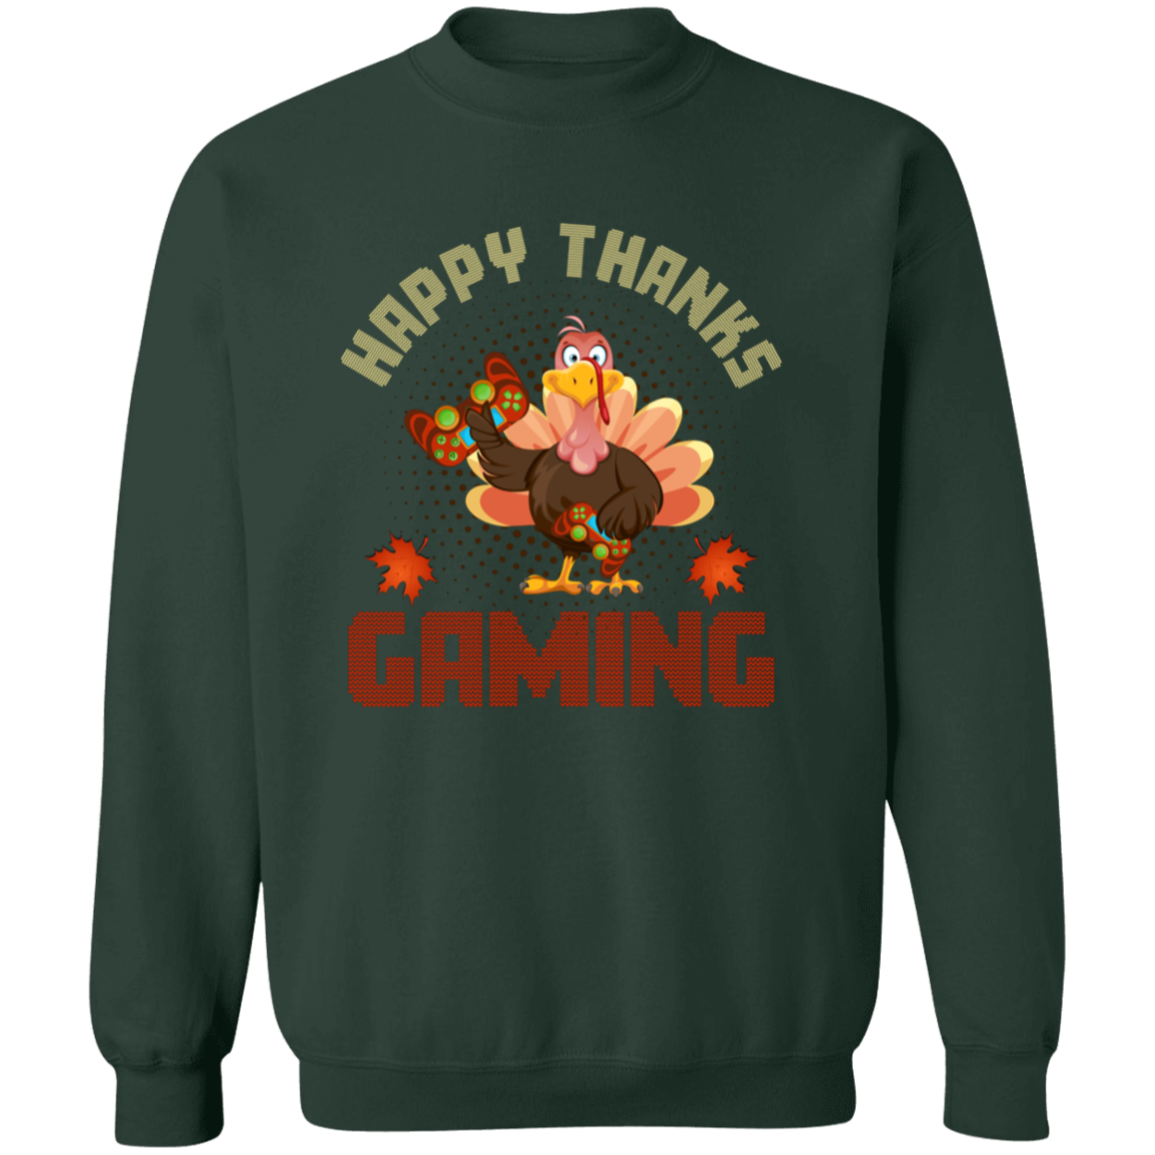 Happy Thanks Gaming Sweatshirt